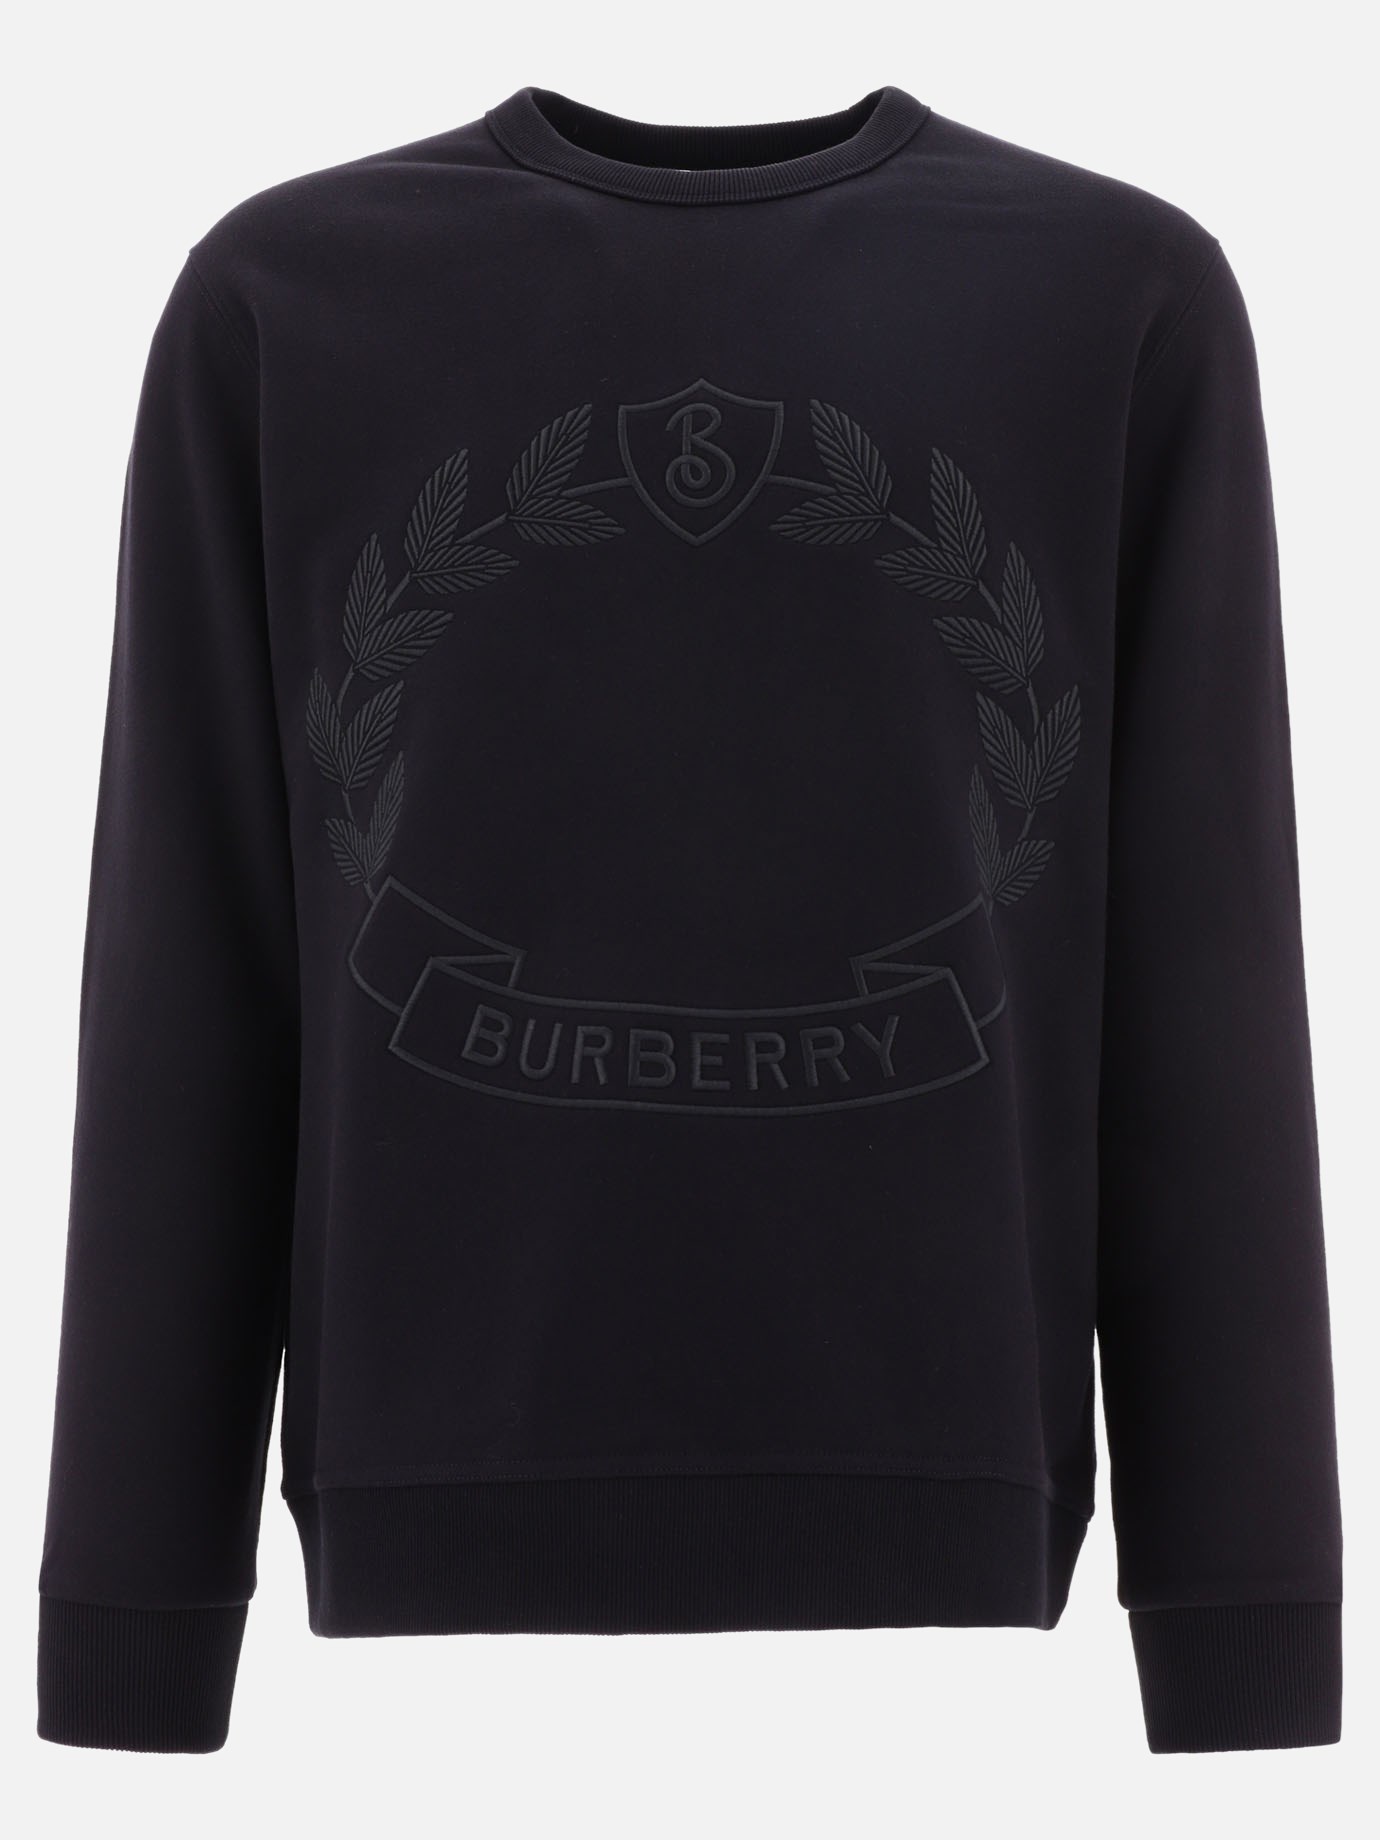  Bram  sweatshirtby Burberry - 0